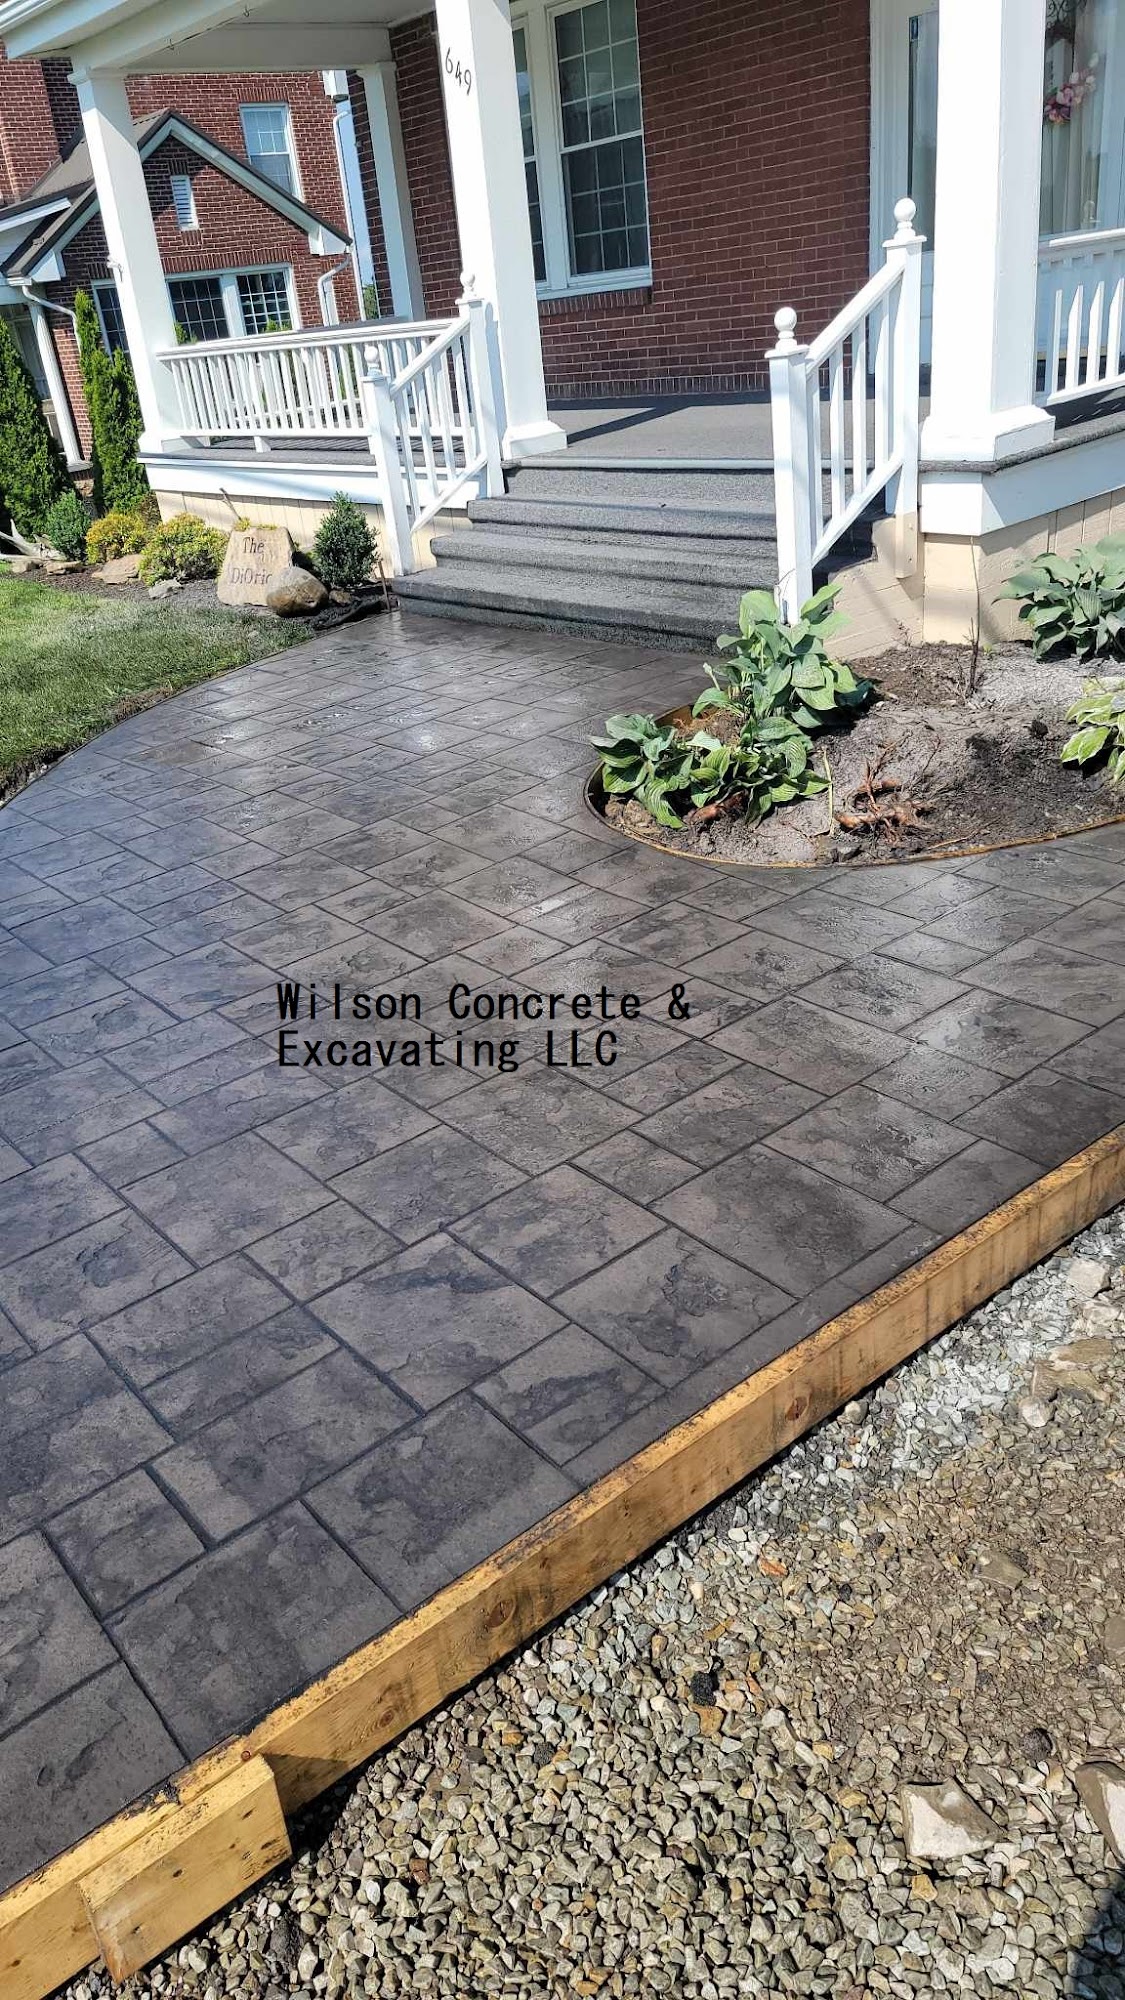 Wilson Concrete & Excavating, LLC 537 Keyser Rd, Boswell Pennsylvania 15531